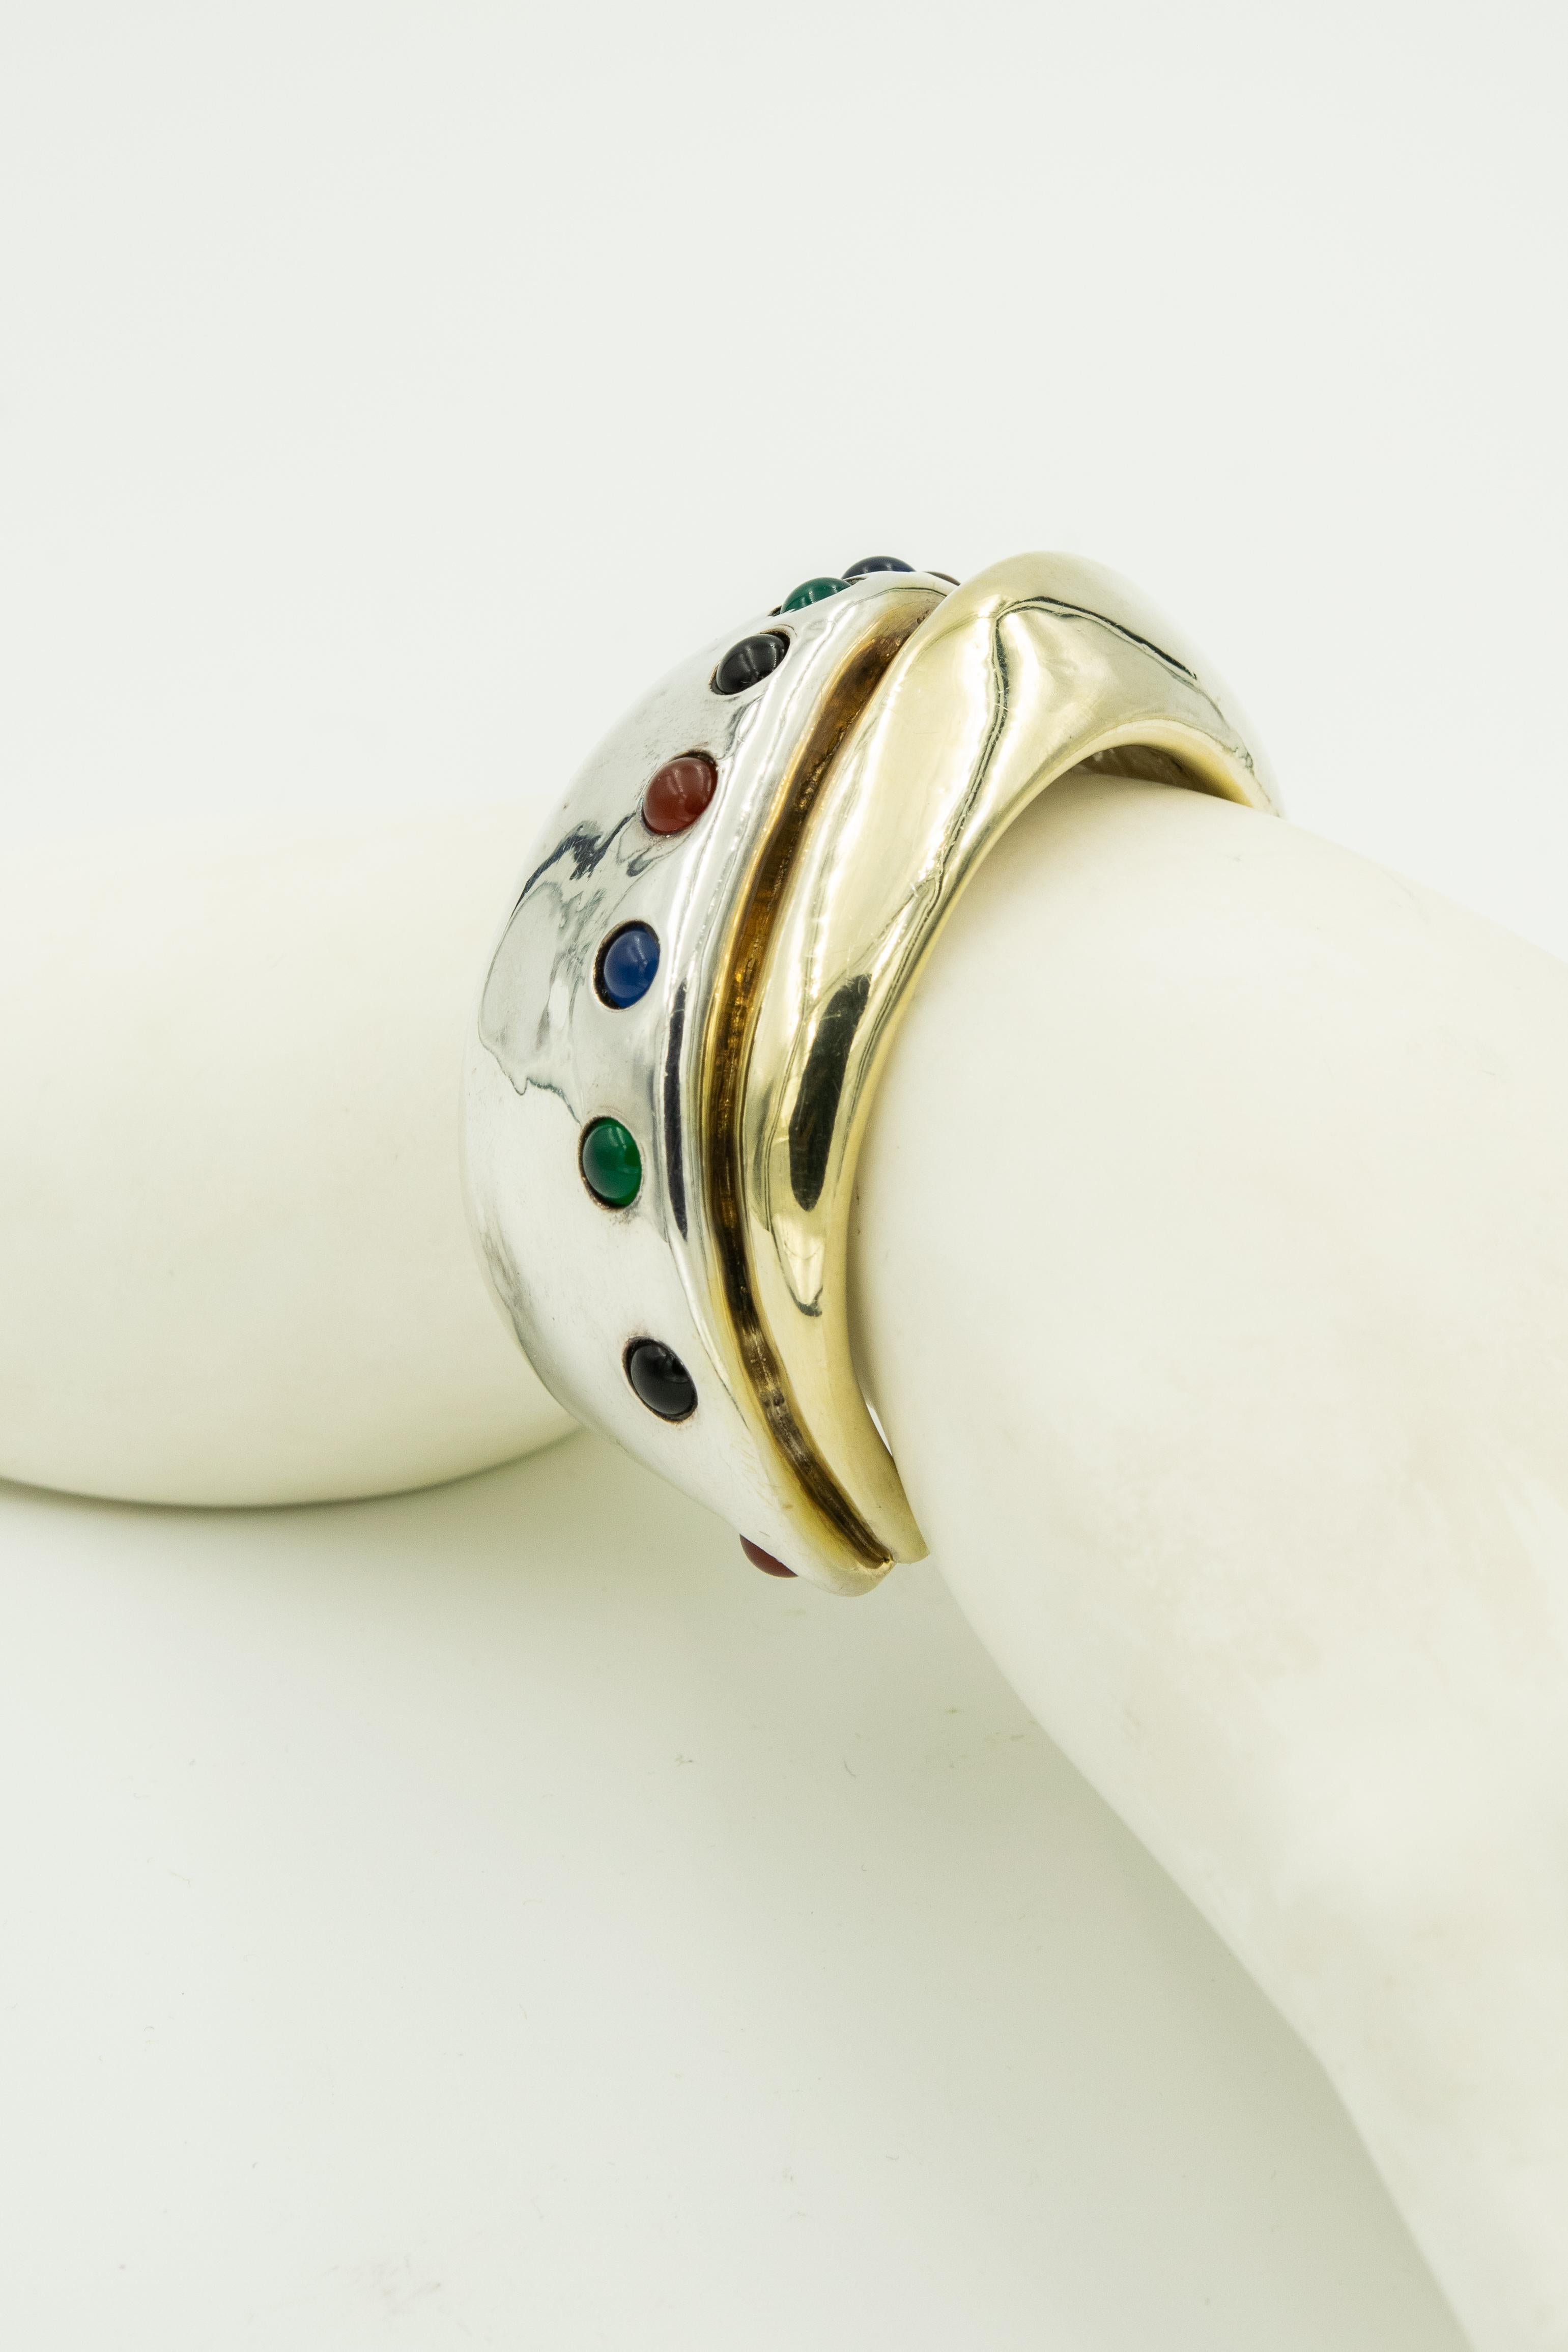 Sam Philipe Sterling Silver Gold Vermeil Modernist Cuff Bracelet Earrings Set 9